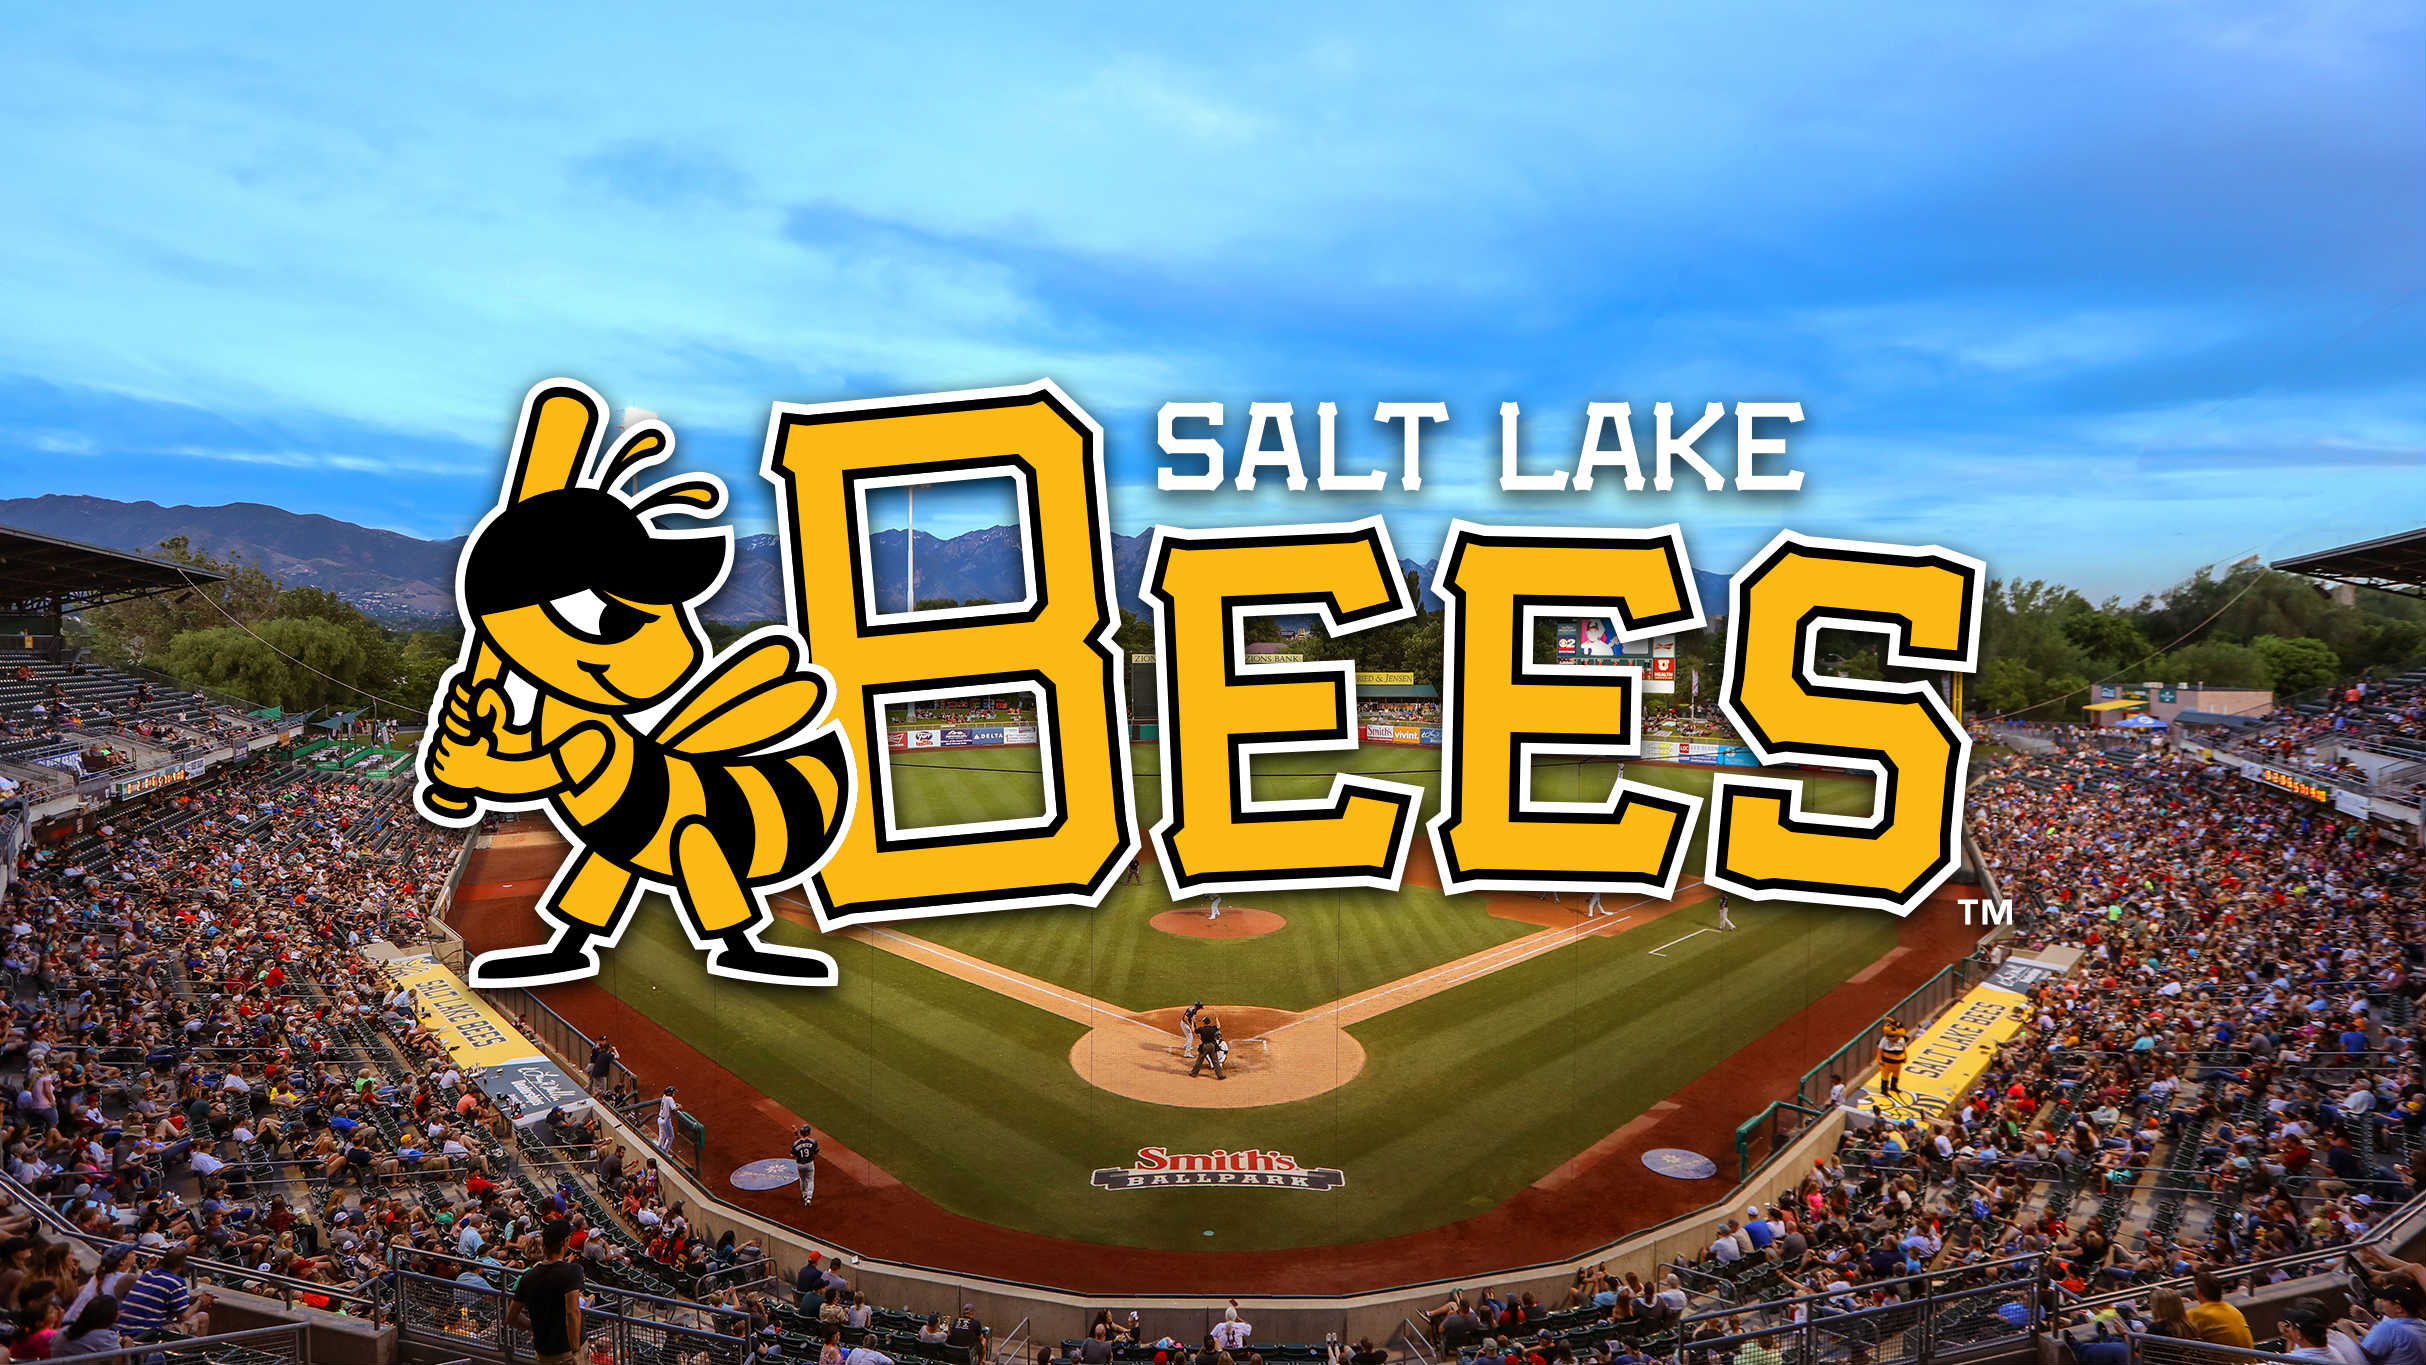 Salt Lake Bees vs. El Paso Chihuahuas at Smith’s Ballpark – Salt Lake City, UT